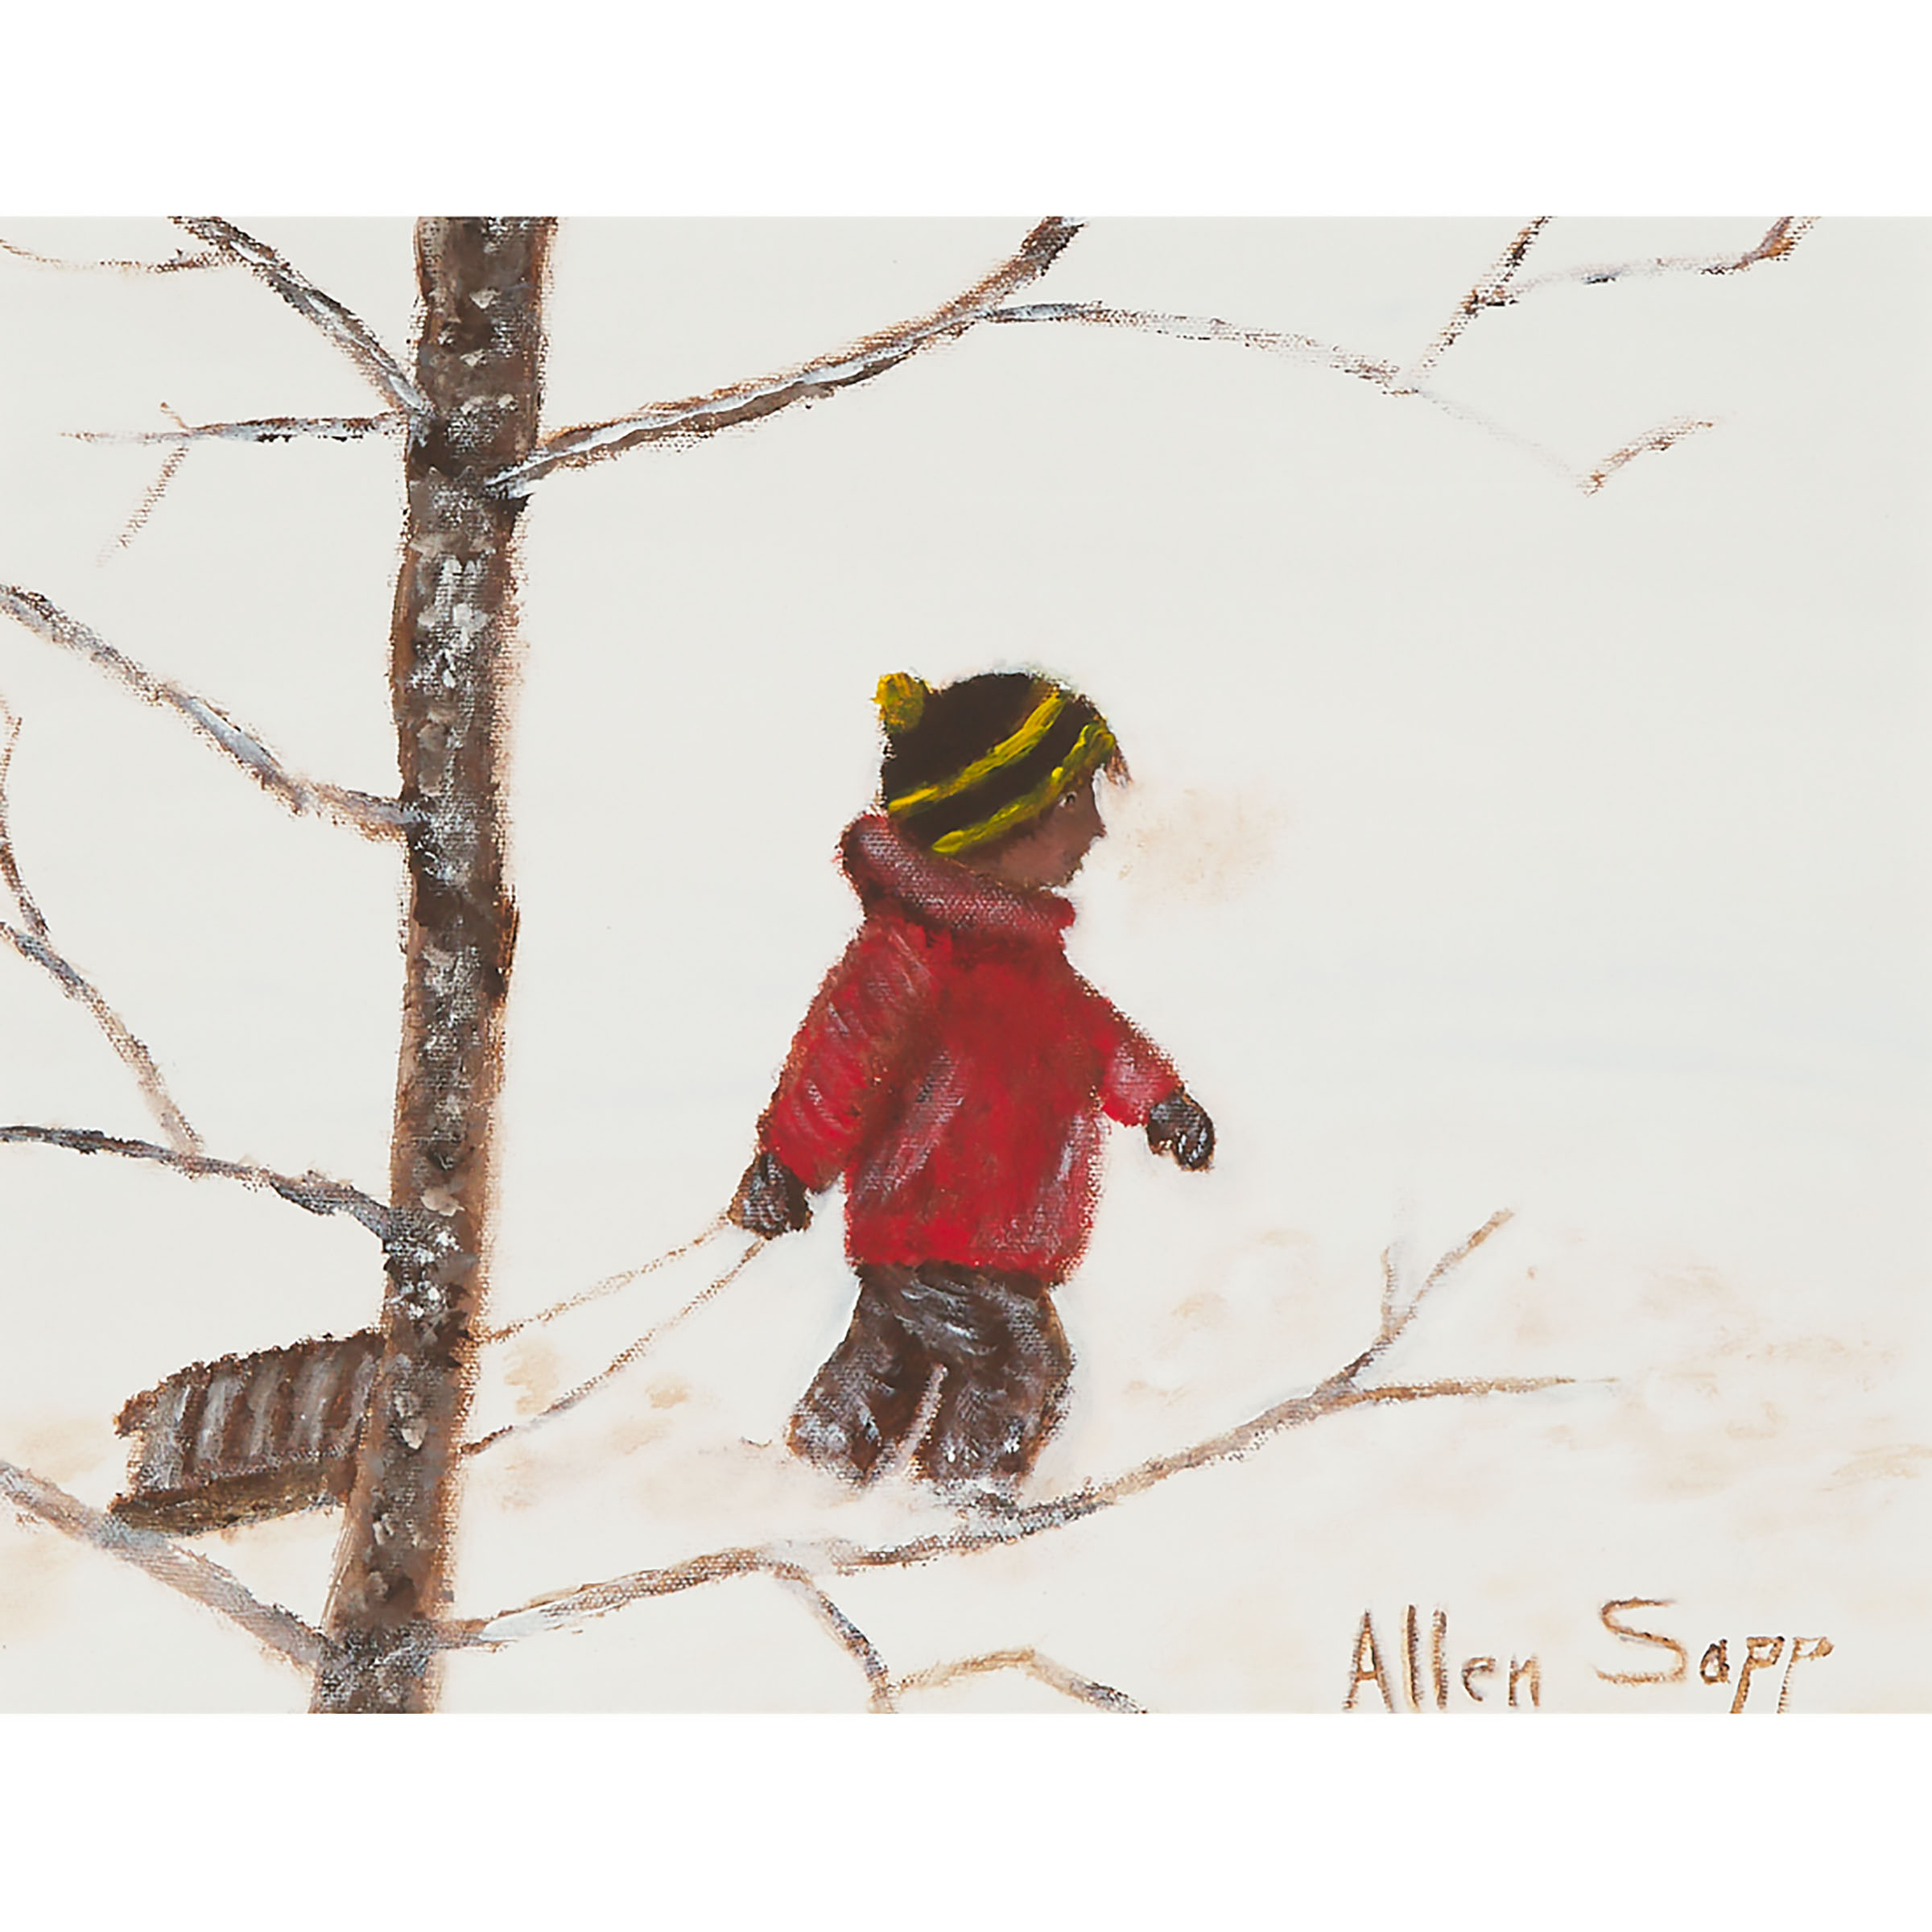 Allen Sapp (1929-2015), Cree